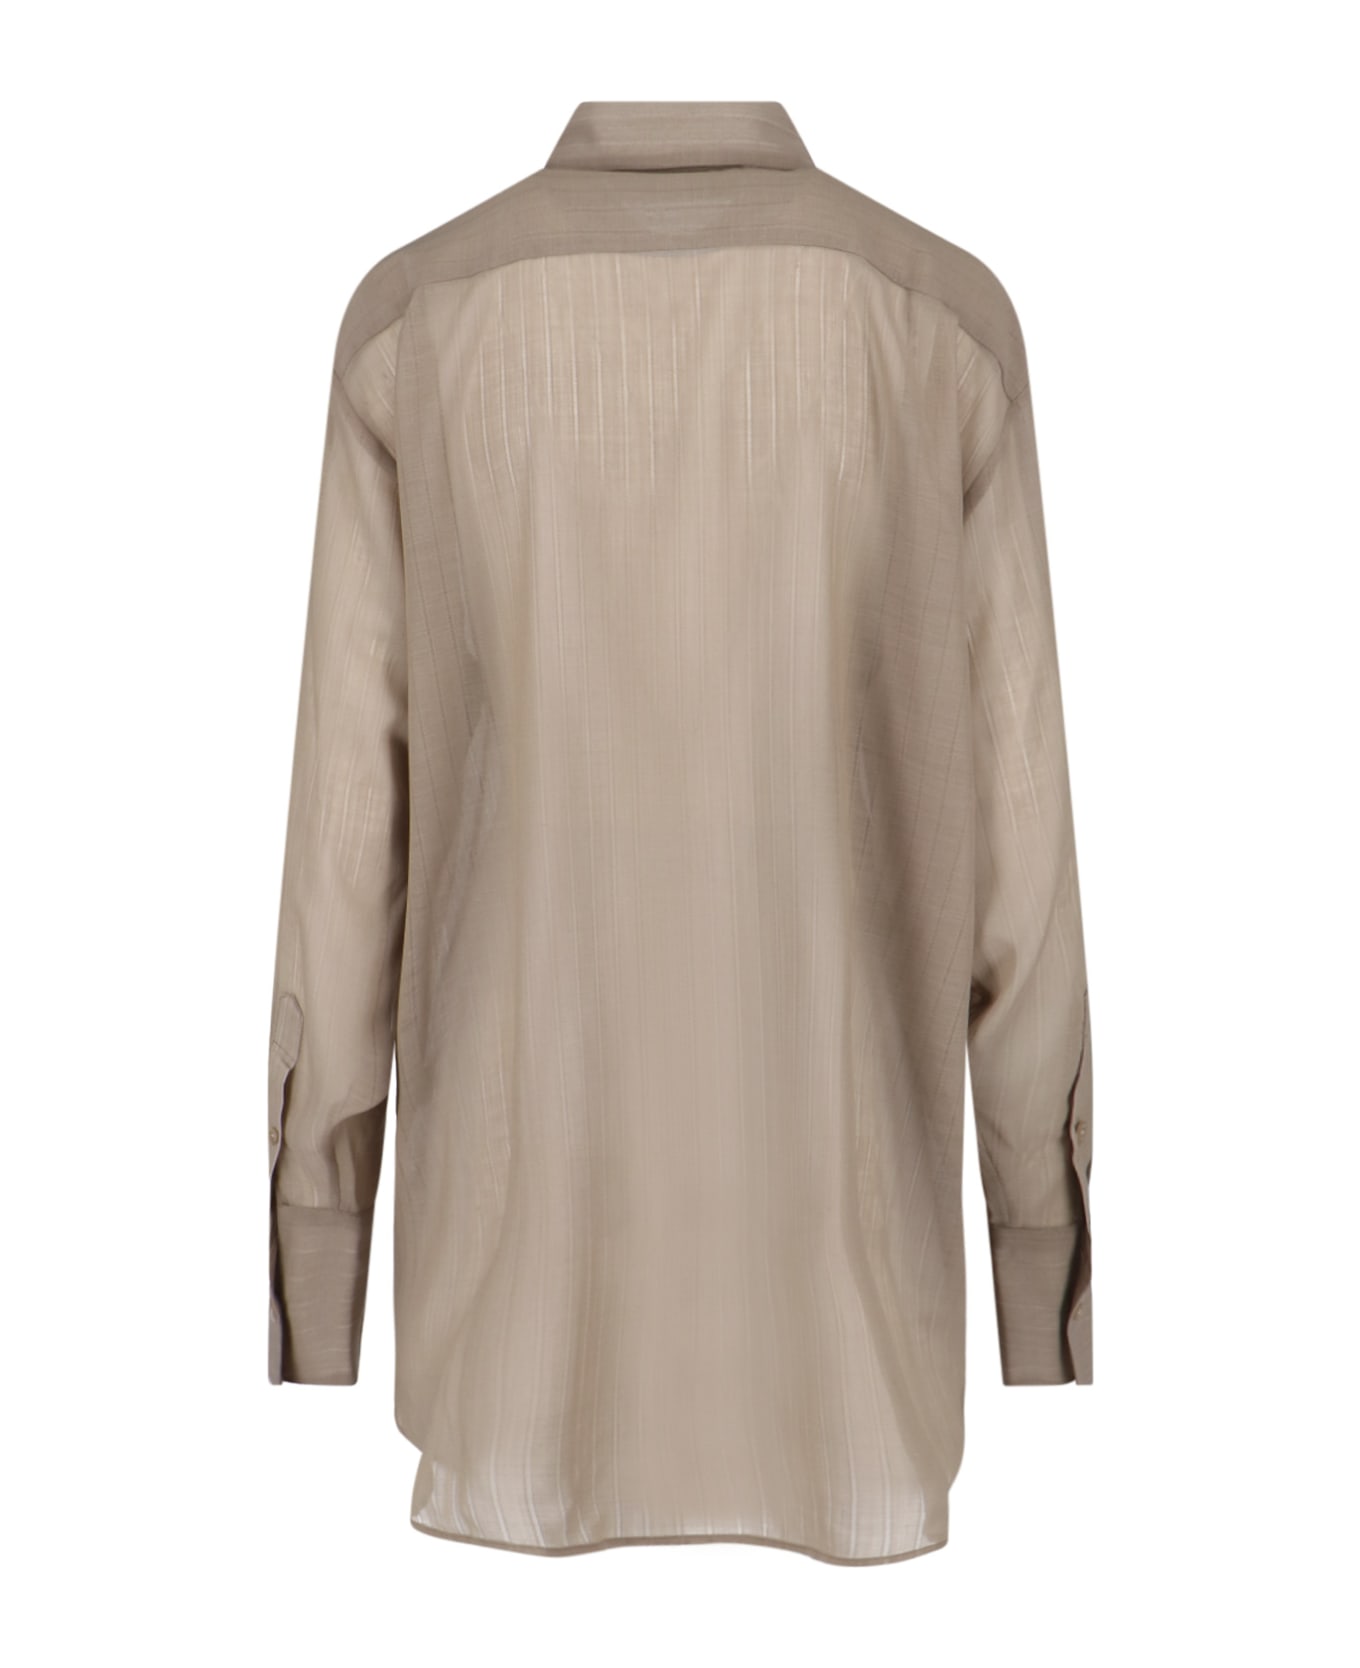 Ludovic de Saint Sernin Oversized Shirt - Beige シャツ